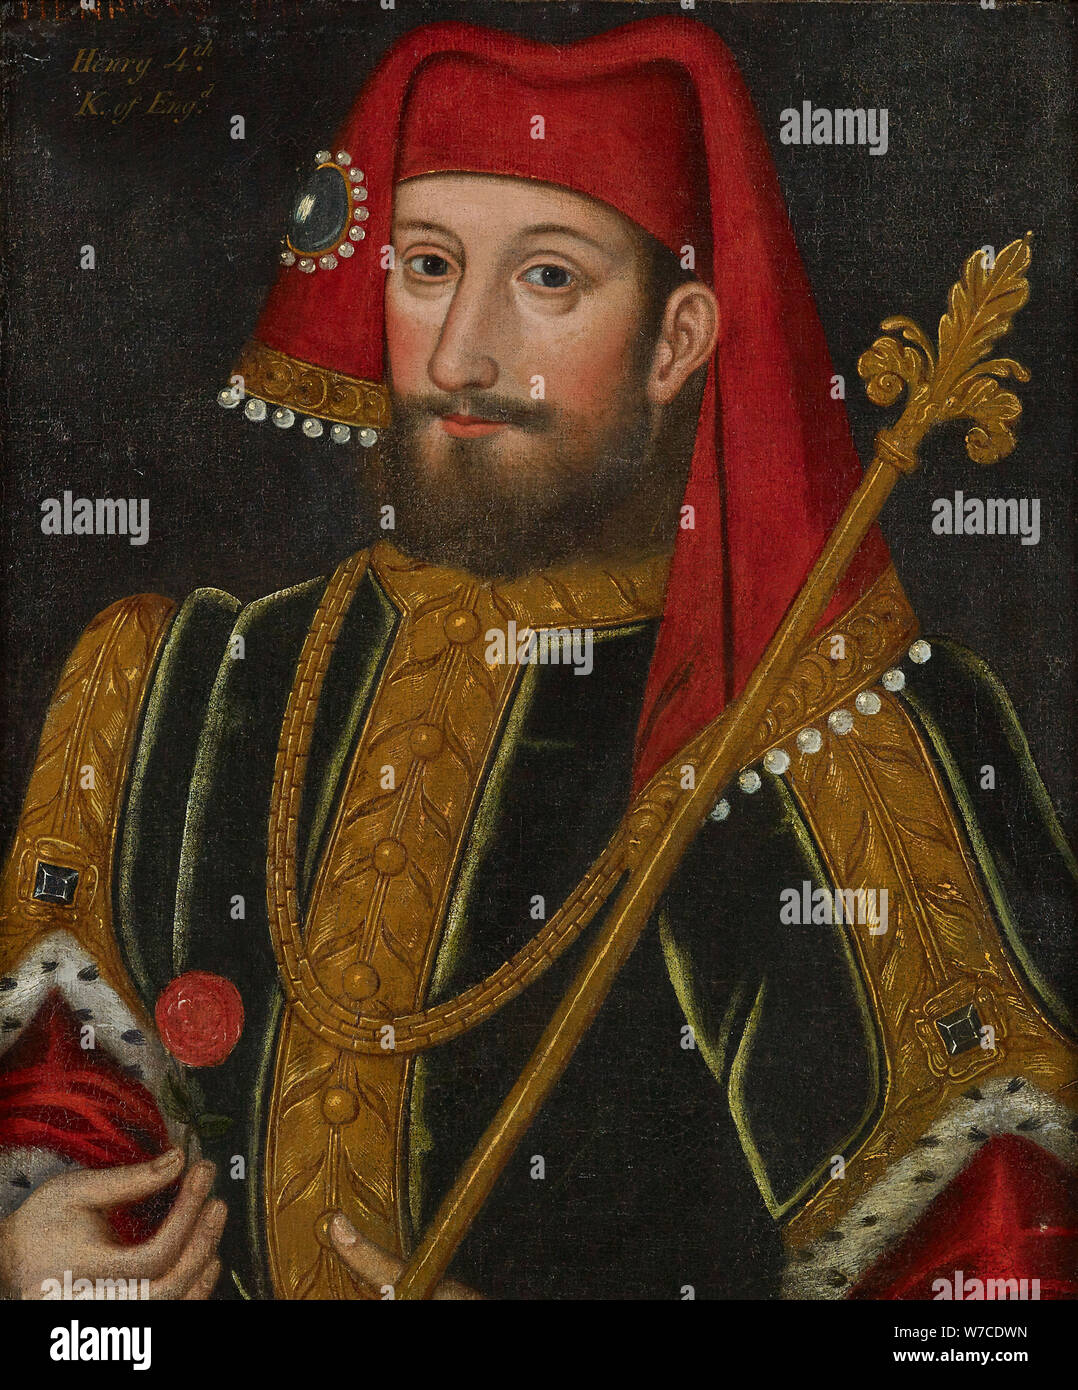 King Henry IV of England. Stock Photo